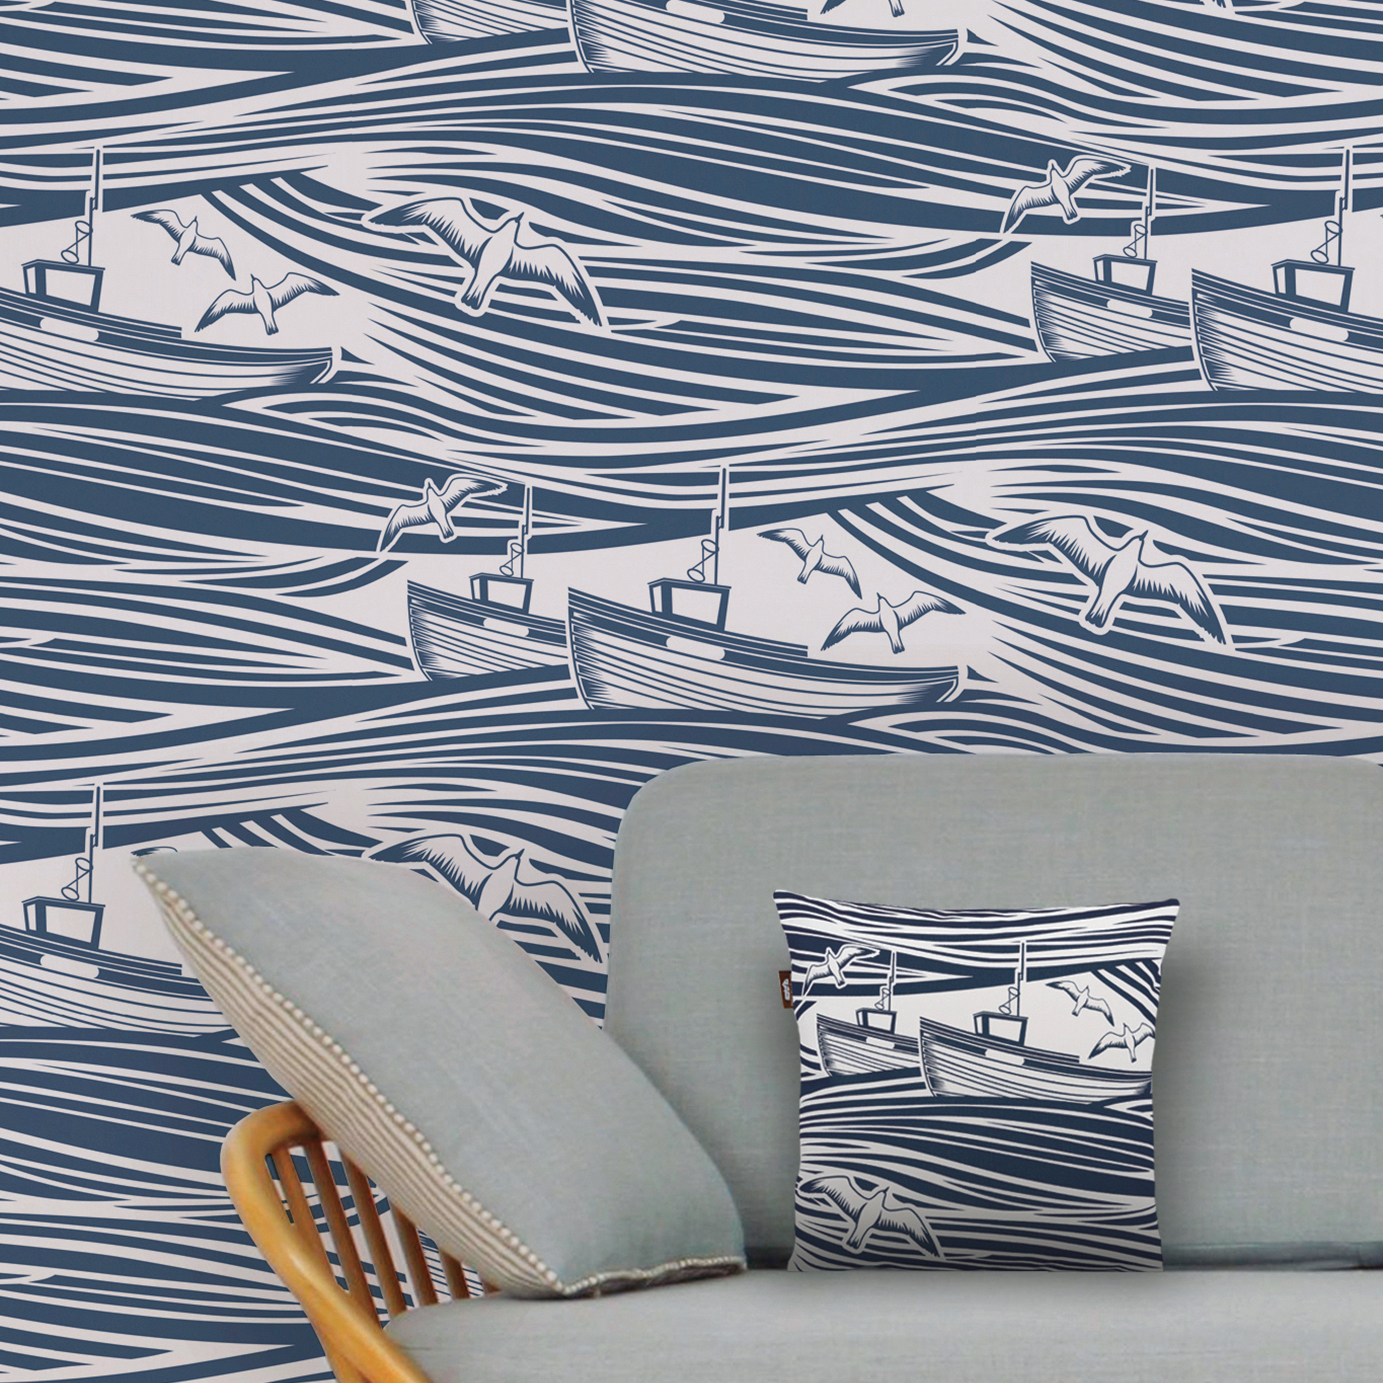 Maritime wallpaper | Nautical patterns | Ocean feeling for walls